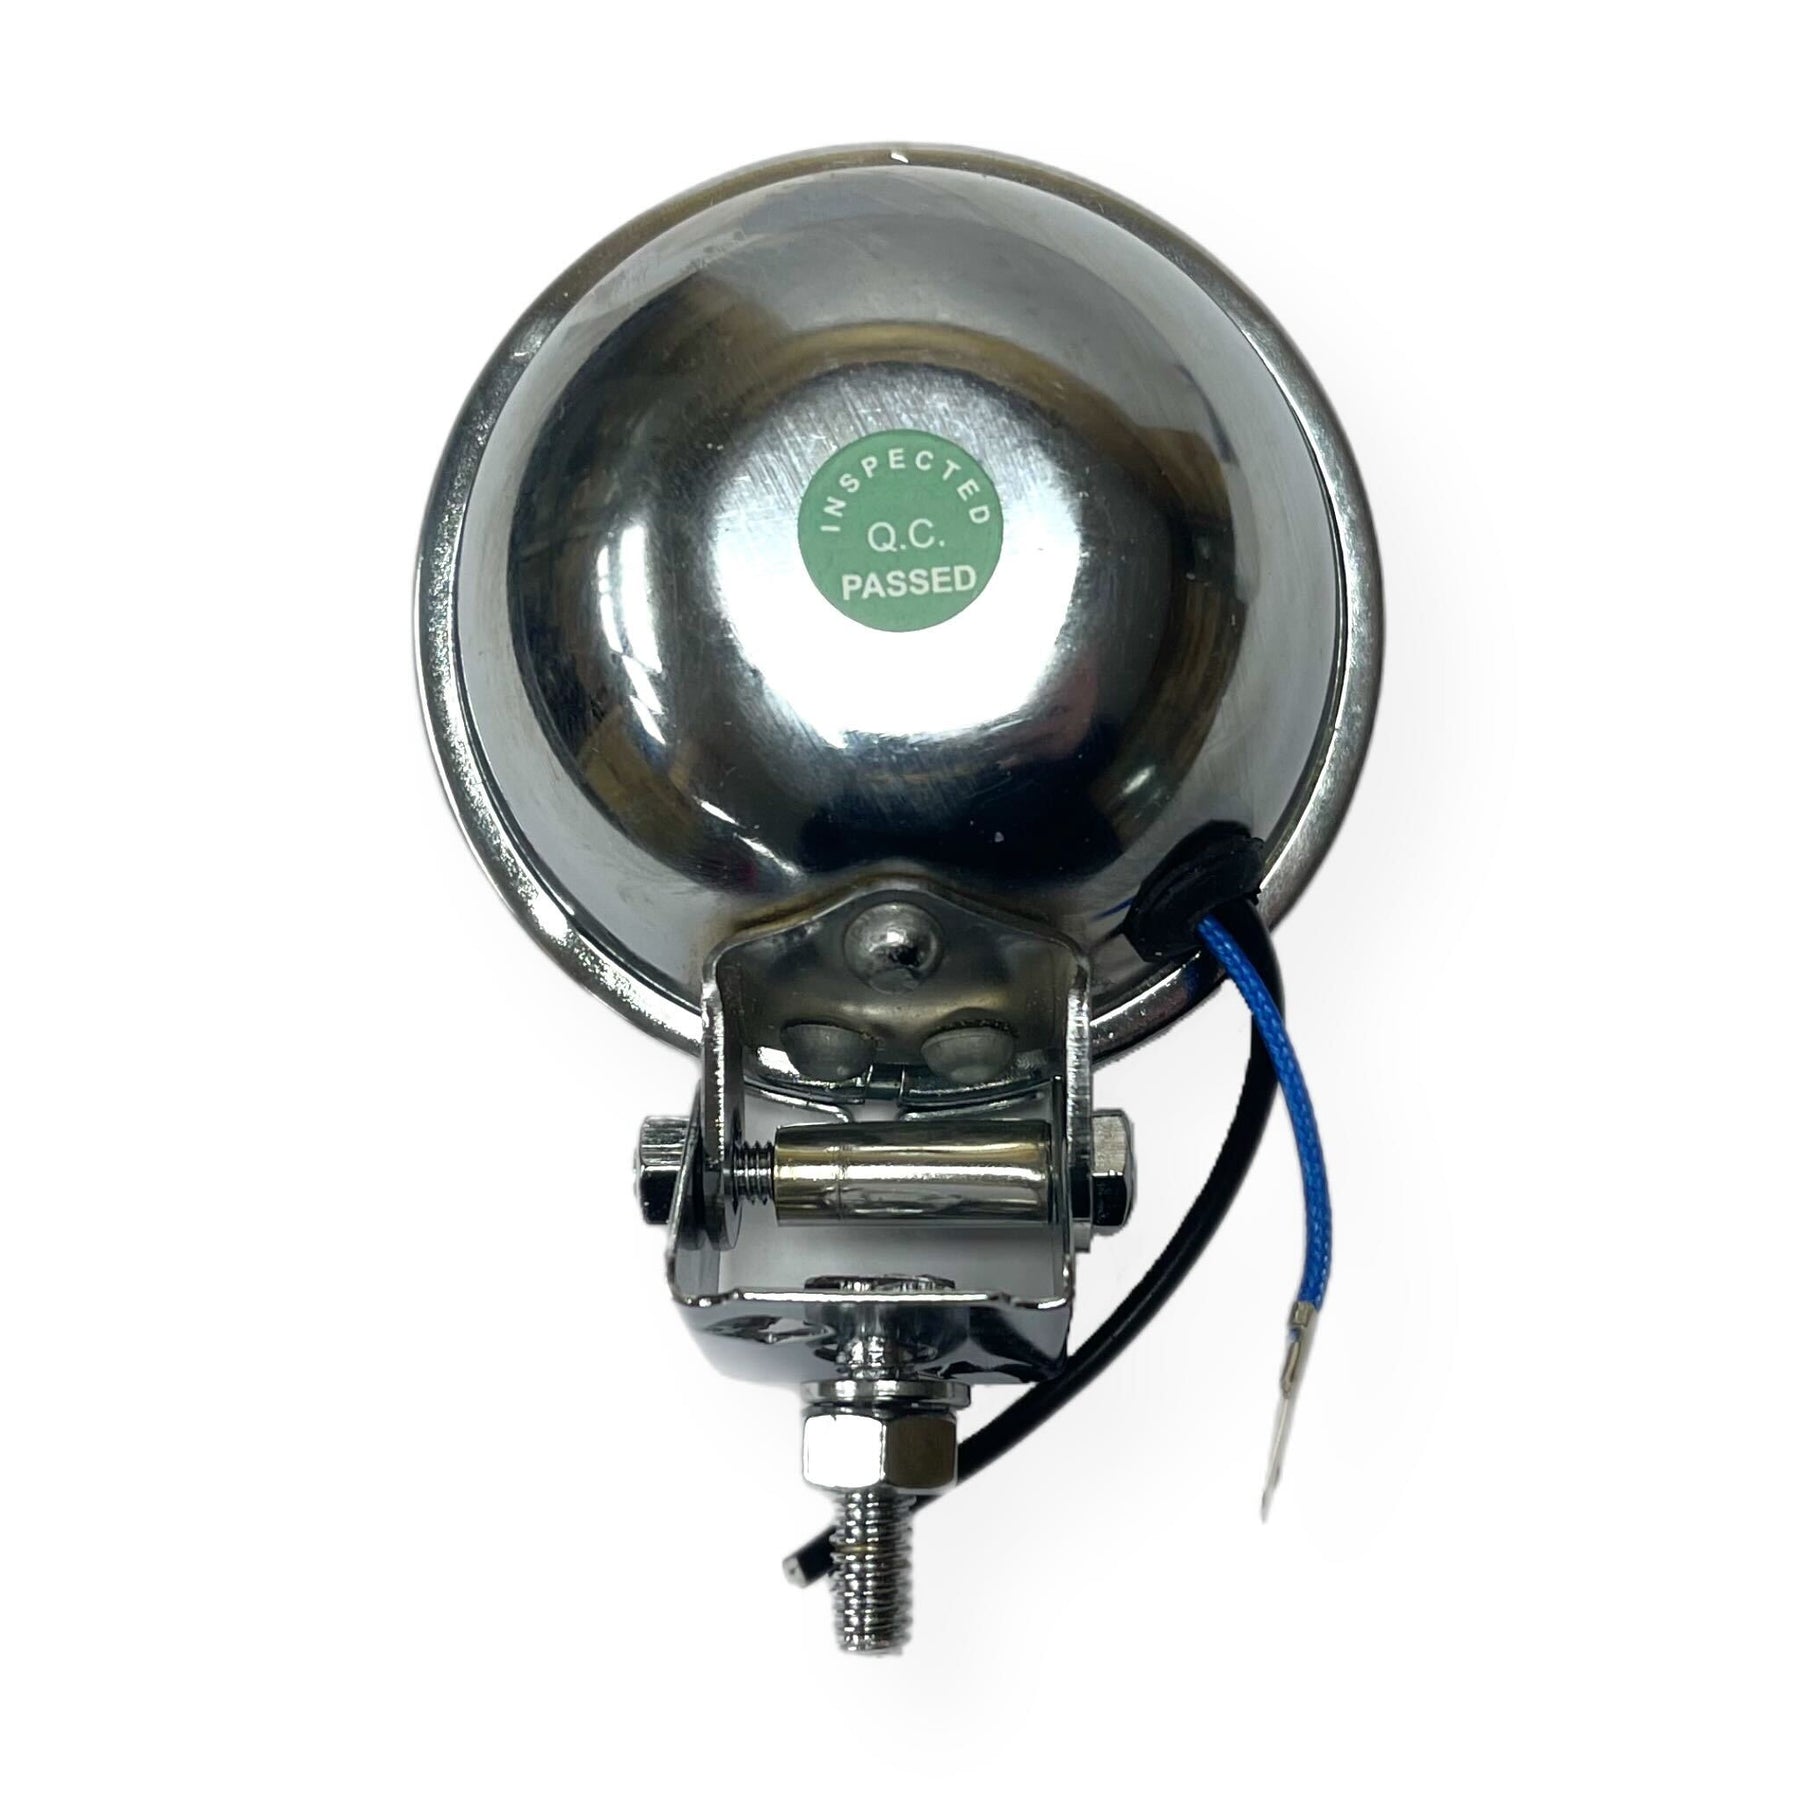 Vespa Lambretta Scooter Spot Light Spotlight Chrome 9cm Honeycomb Amber Lens